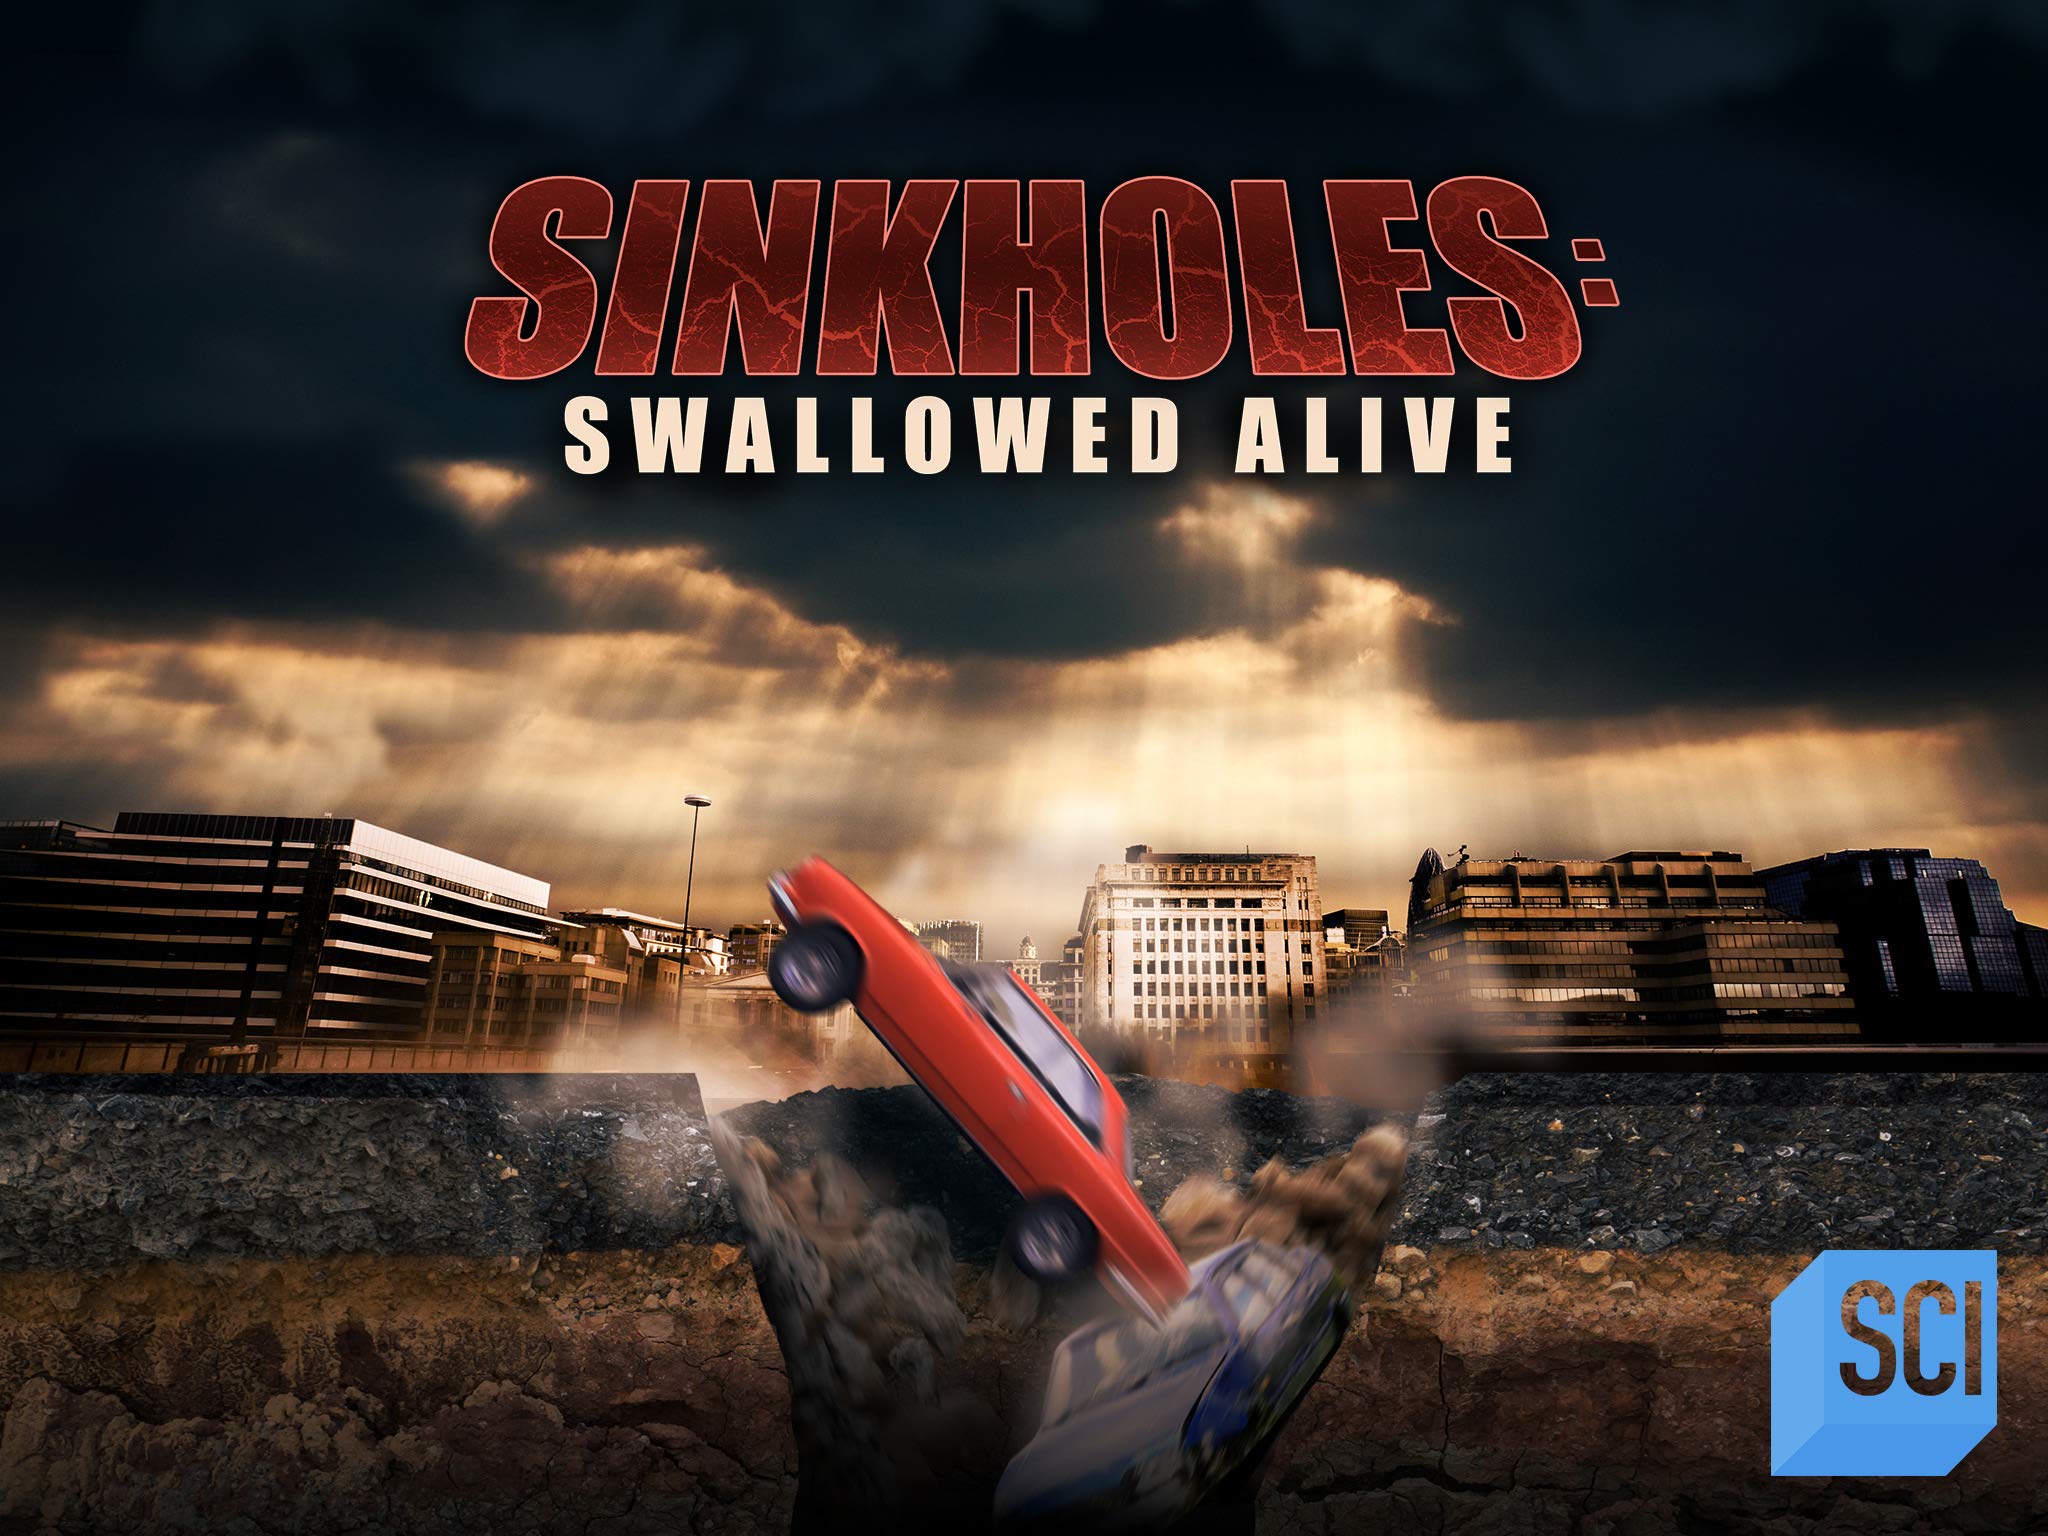 Sinkholes swallowed alive episodes